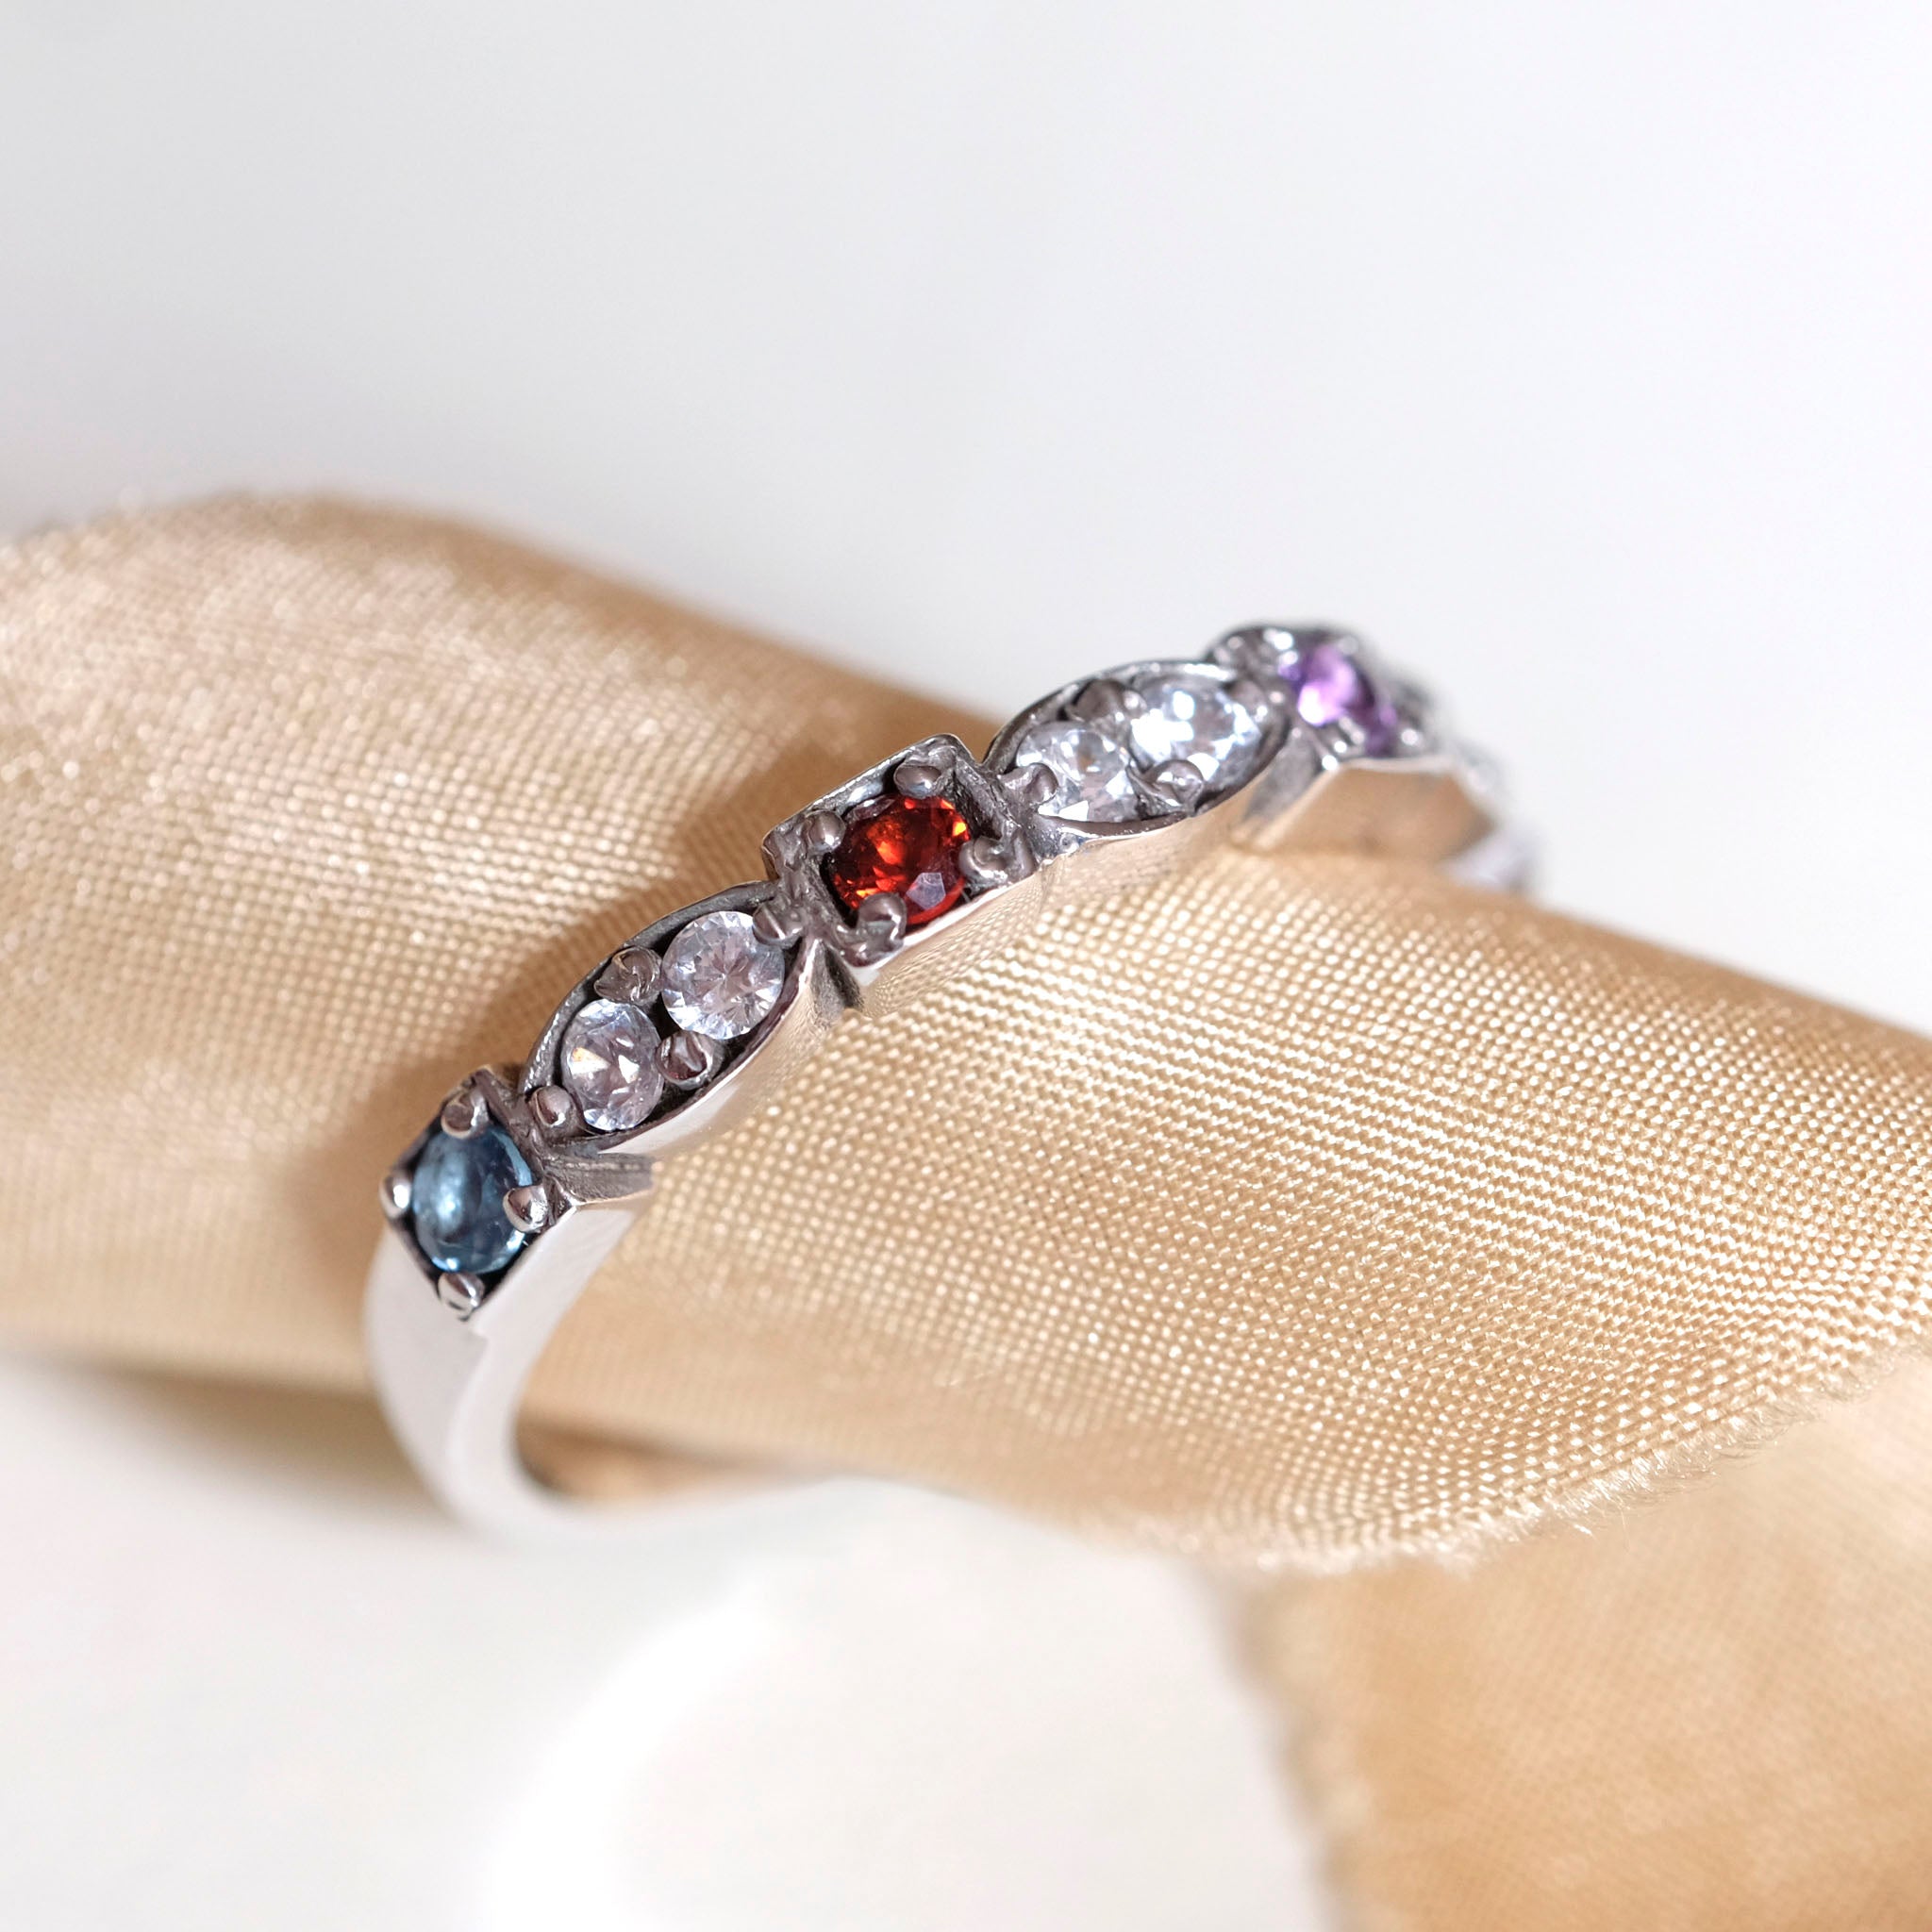 Birthstone ring including diamonds, ruby and aquamarine